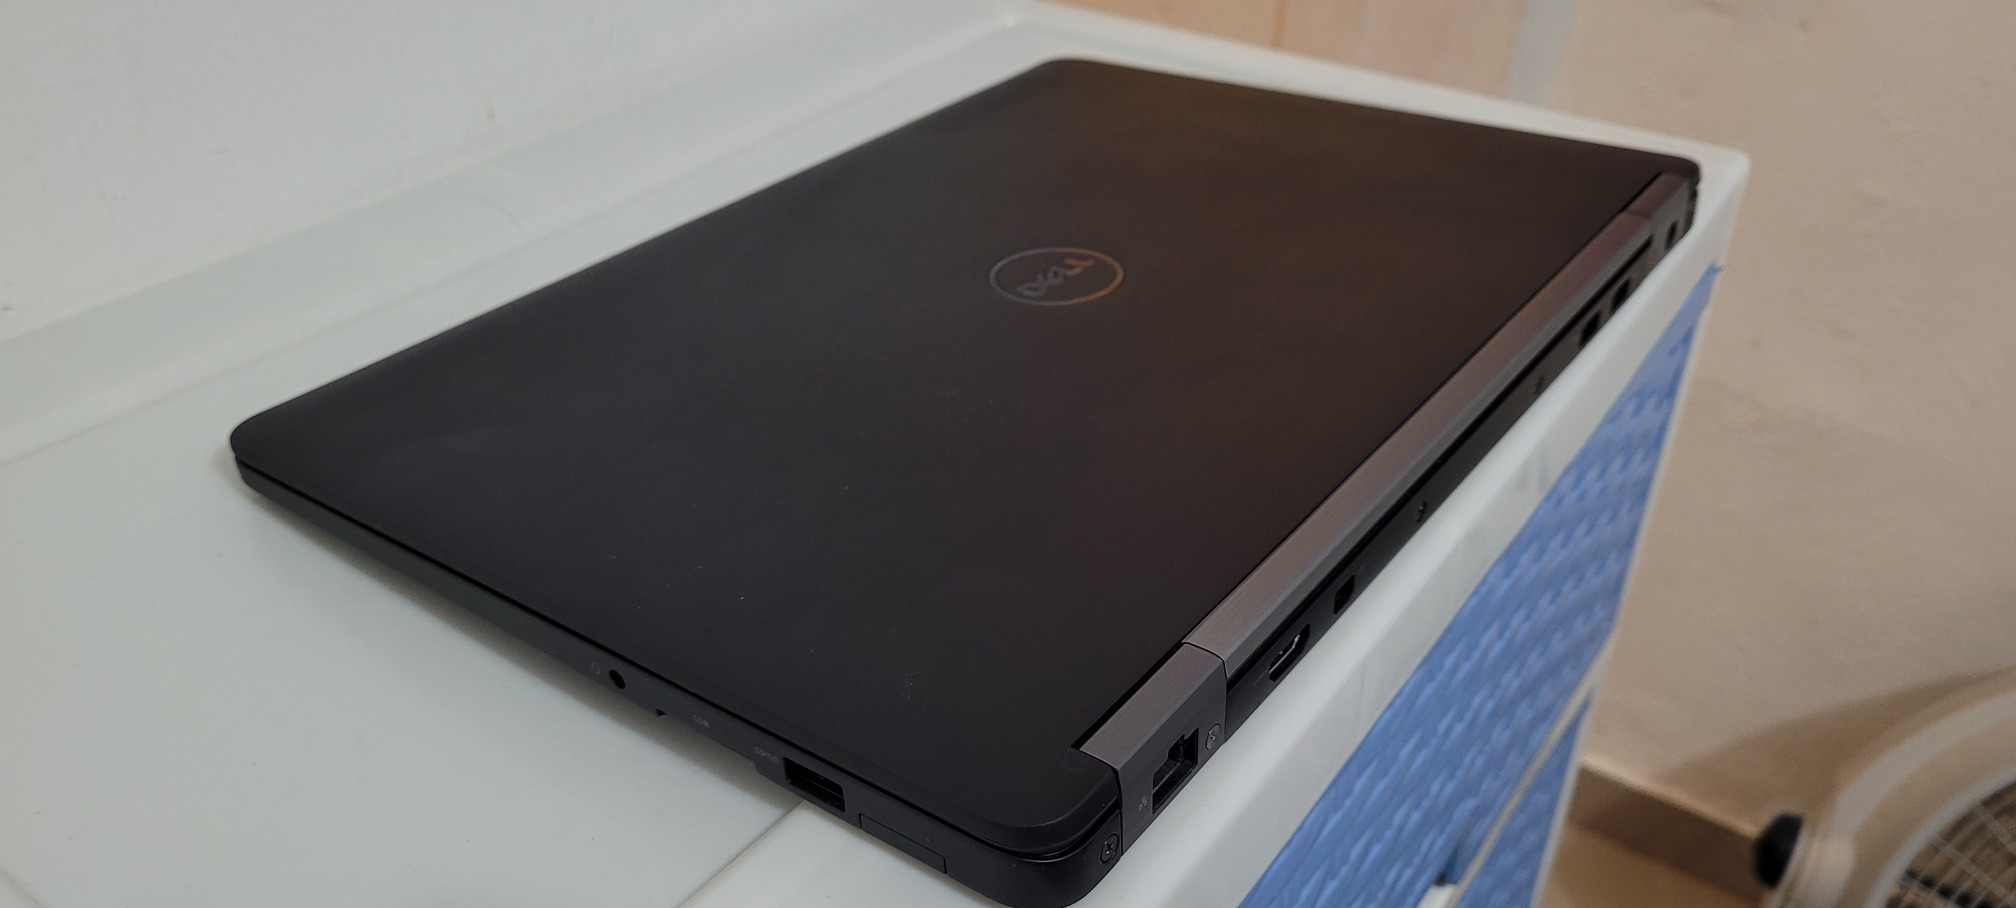 computadoras y laptops - Dell 7470 14 Pulg Core i7 6ta Gen Ram 8gb ddr4 Disco 512gb SSD 1080p 2